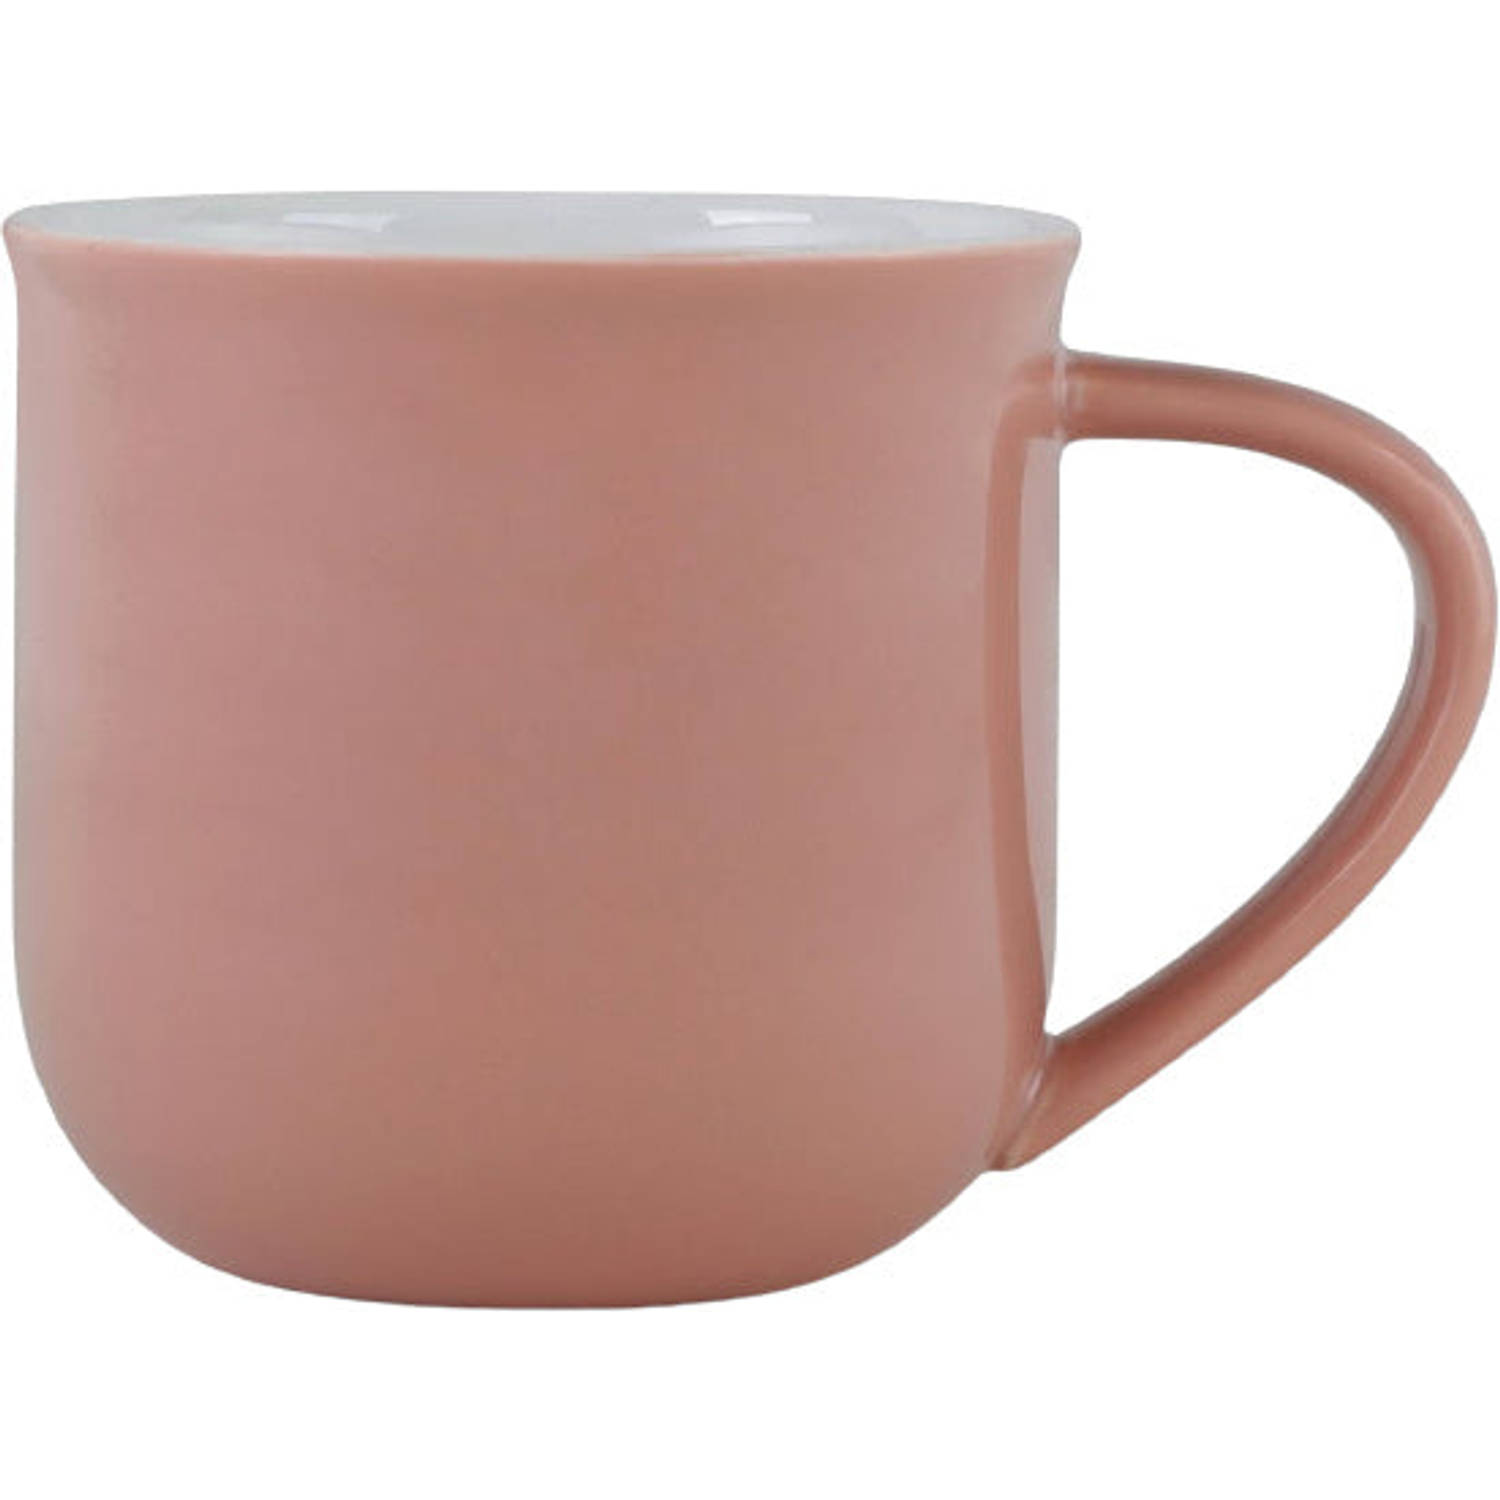 Viva - Minima Balanced Medium Tea Cup Set of 2 Pieces (Stone Rose)